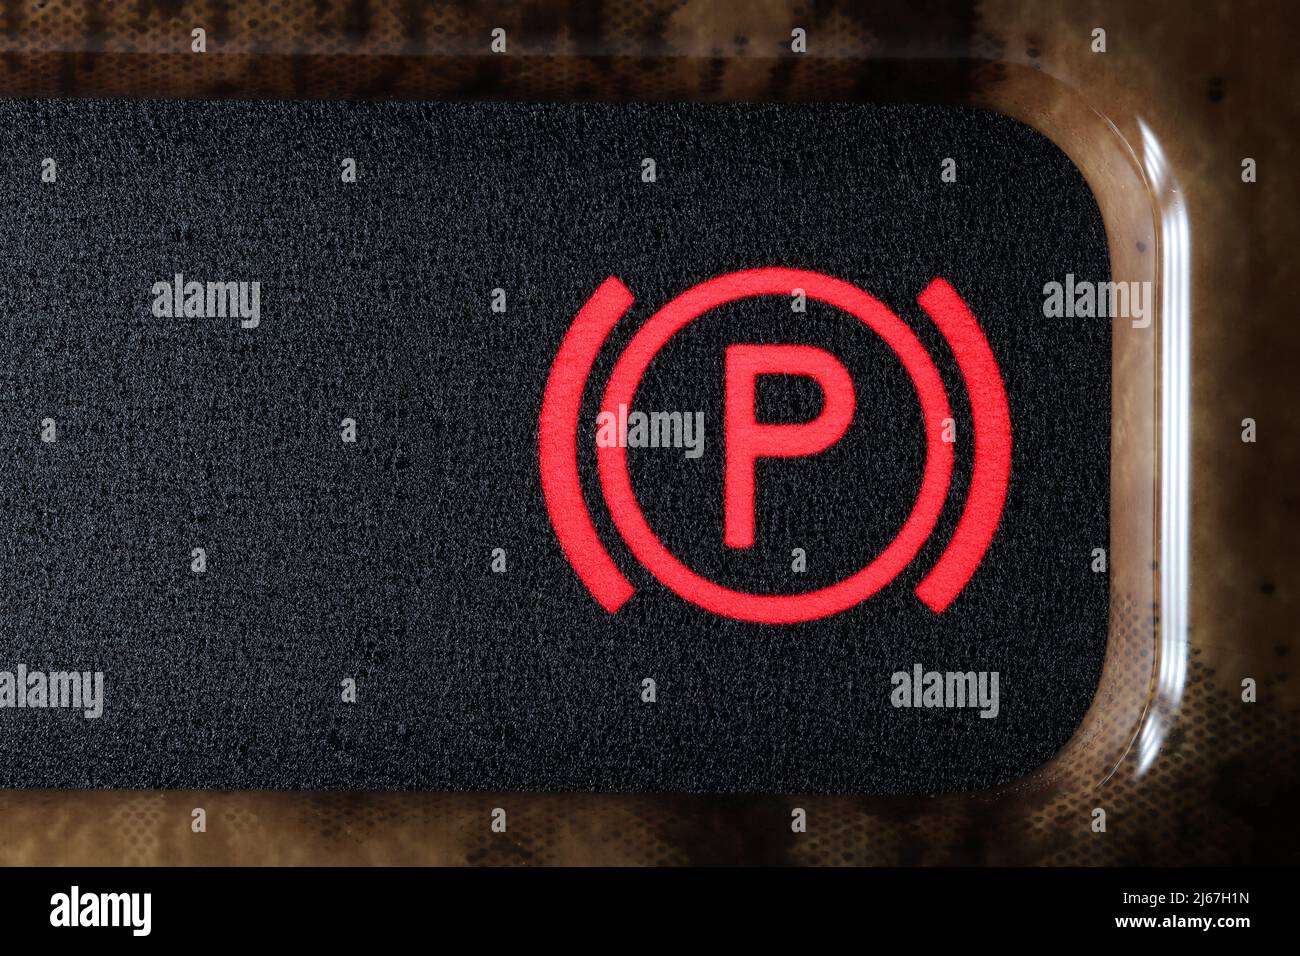 parking brake control light in car dashboard Stock Photo